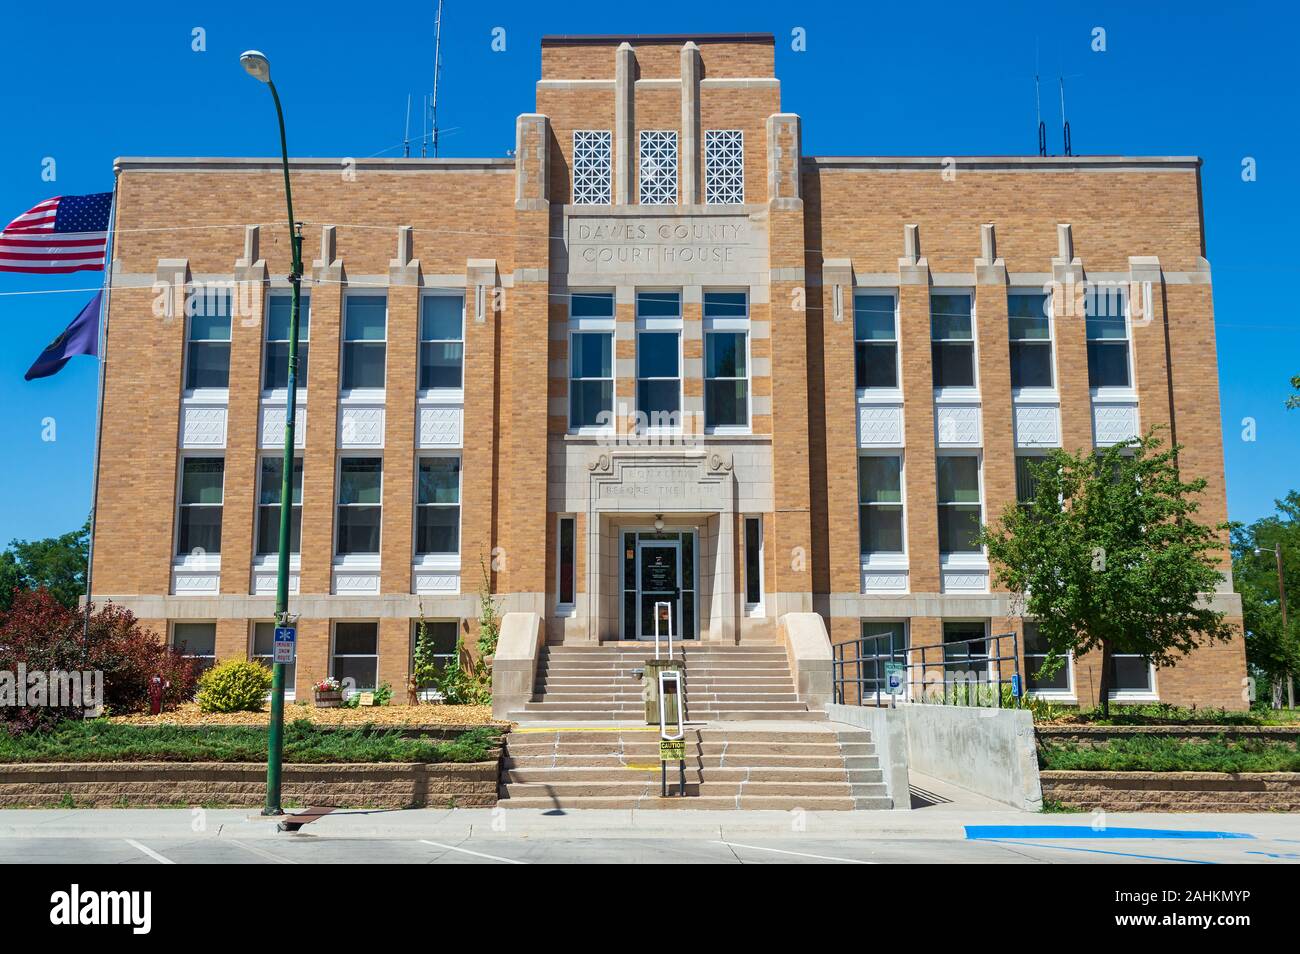 Chadron, Nebraska - July 25, 2014: The Dawes County Courthouse Stock Photo